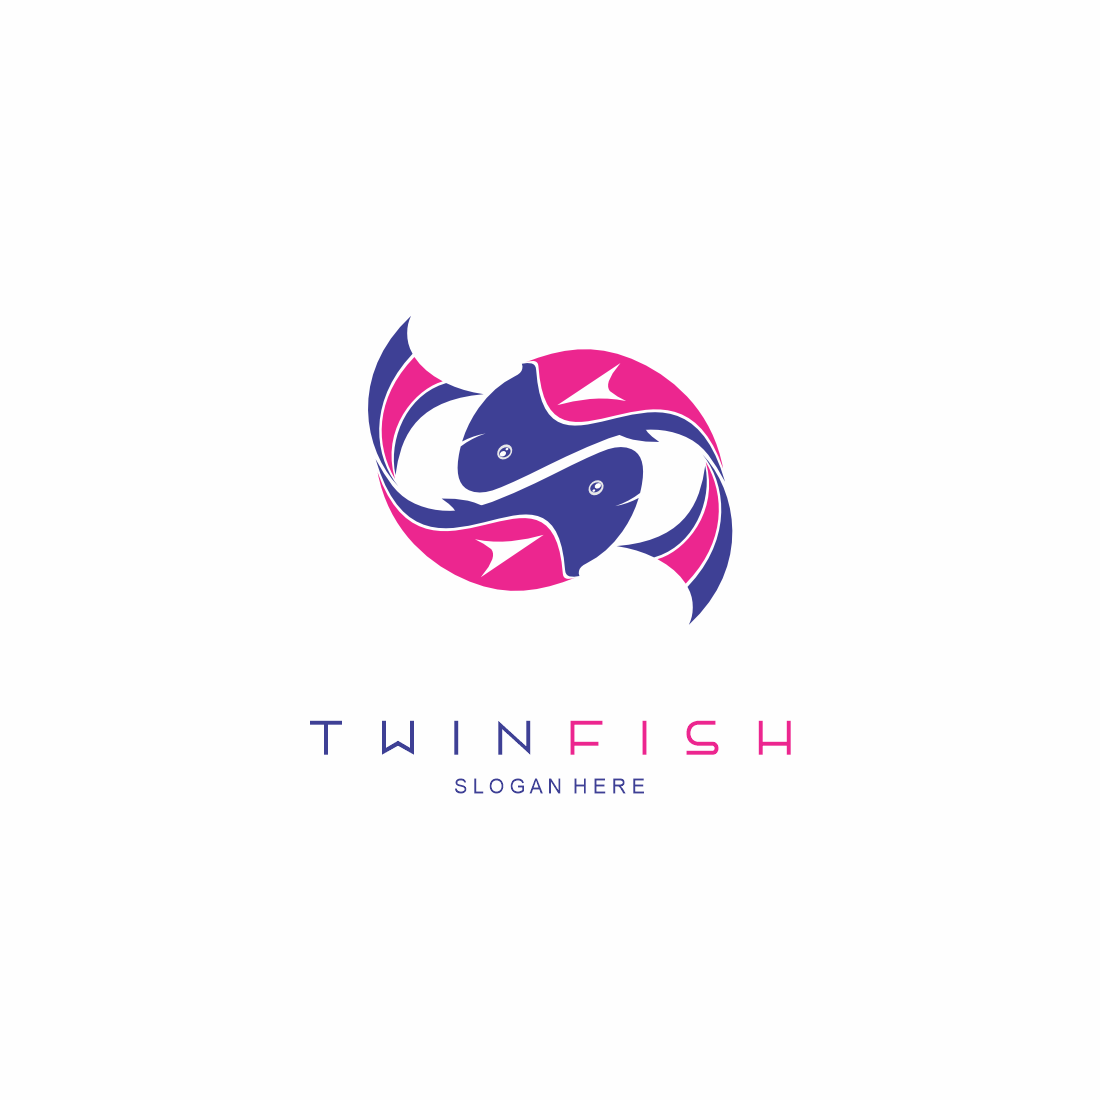 twinfish 488